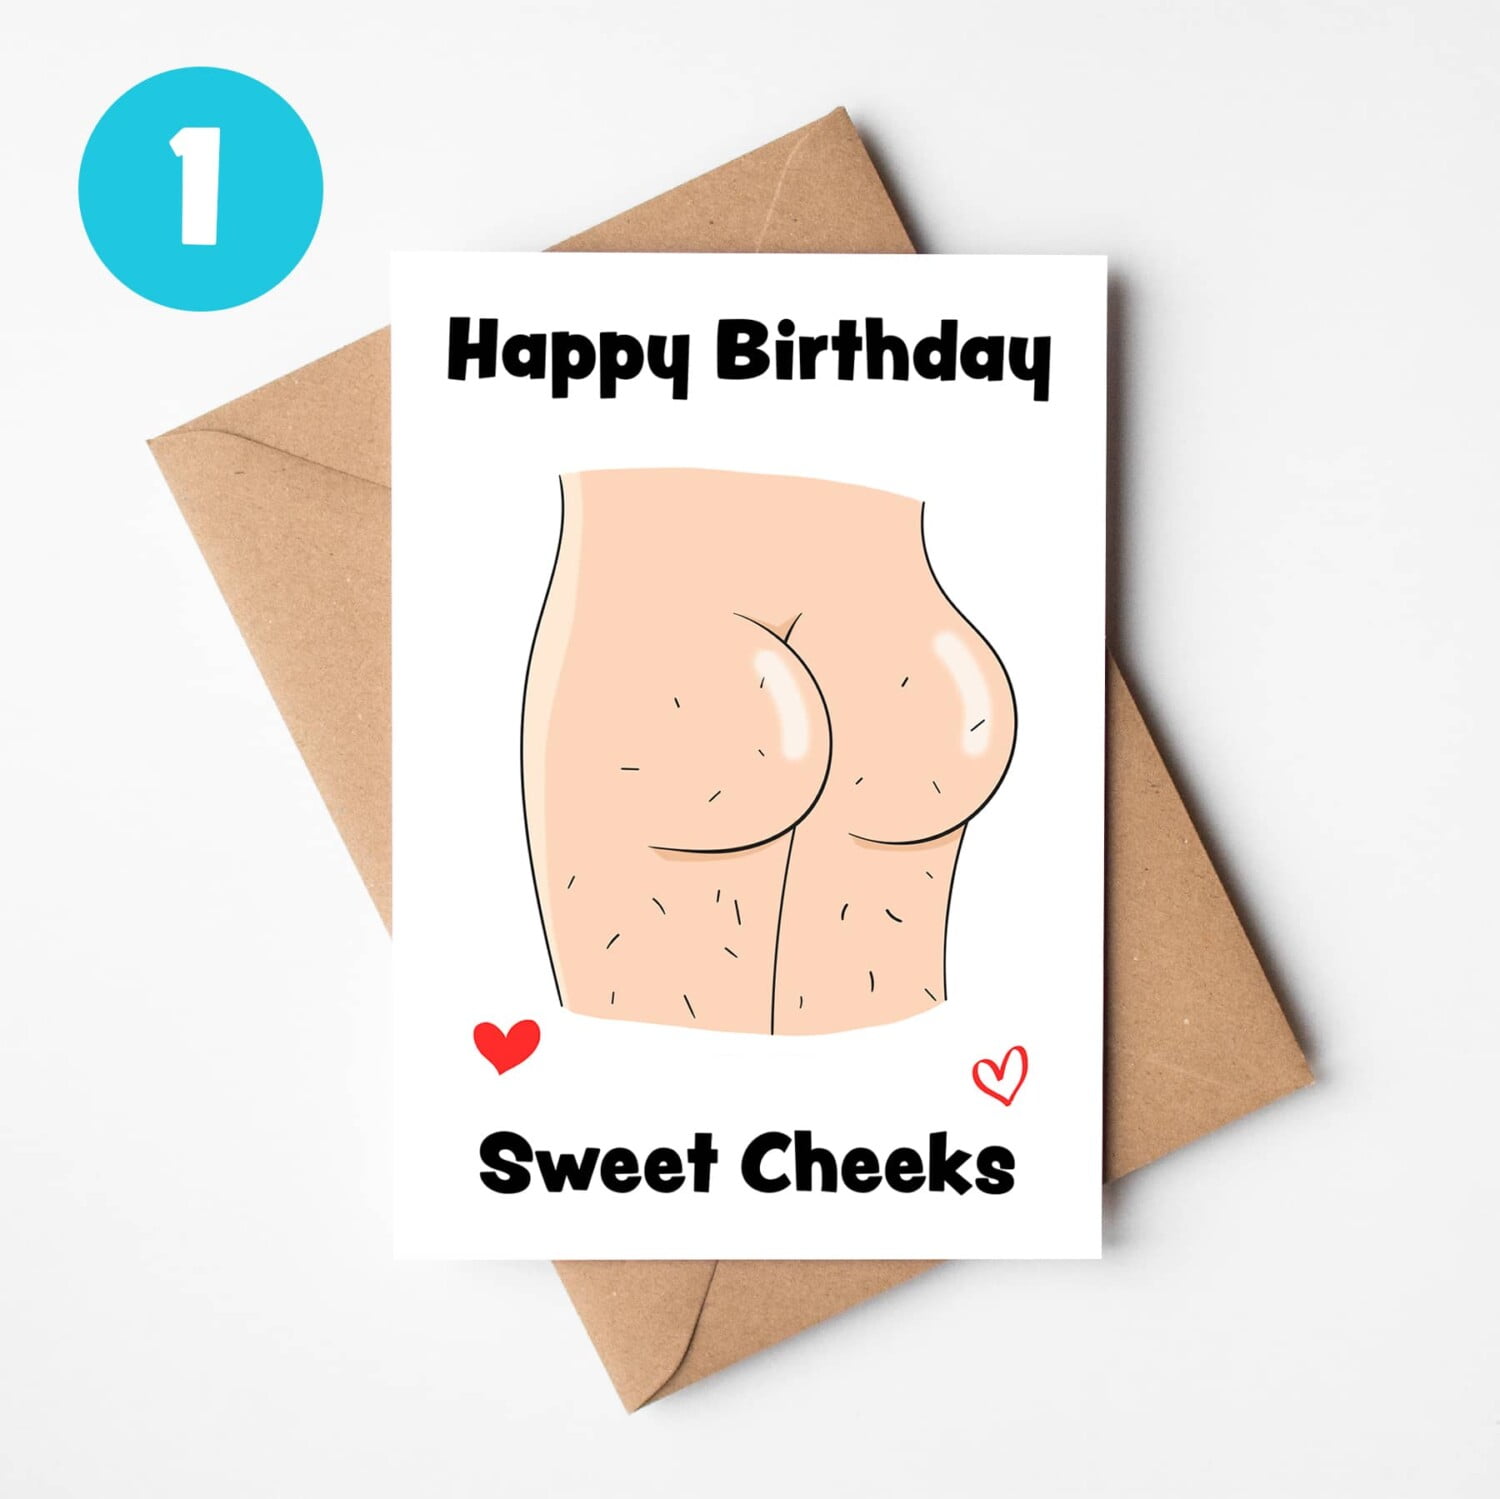 Happy Birthday Sweet Cheeks Card! Printing in County Monaghan, Ireland by Design Gaff